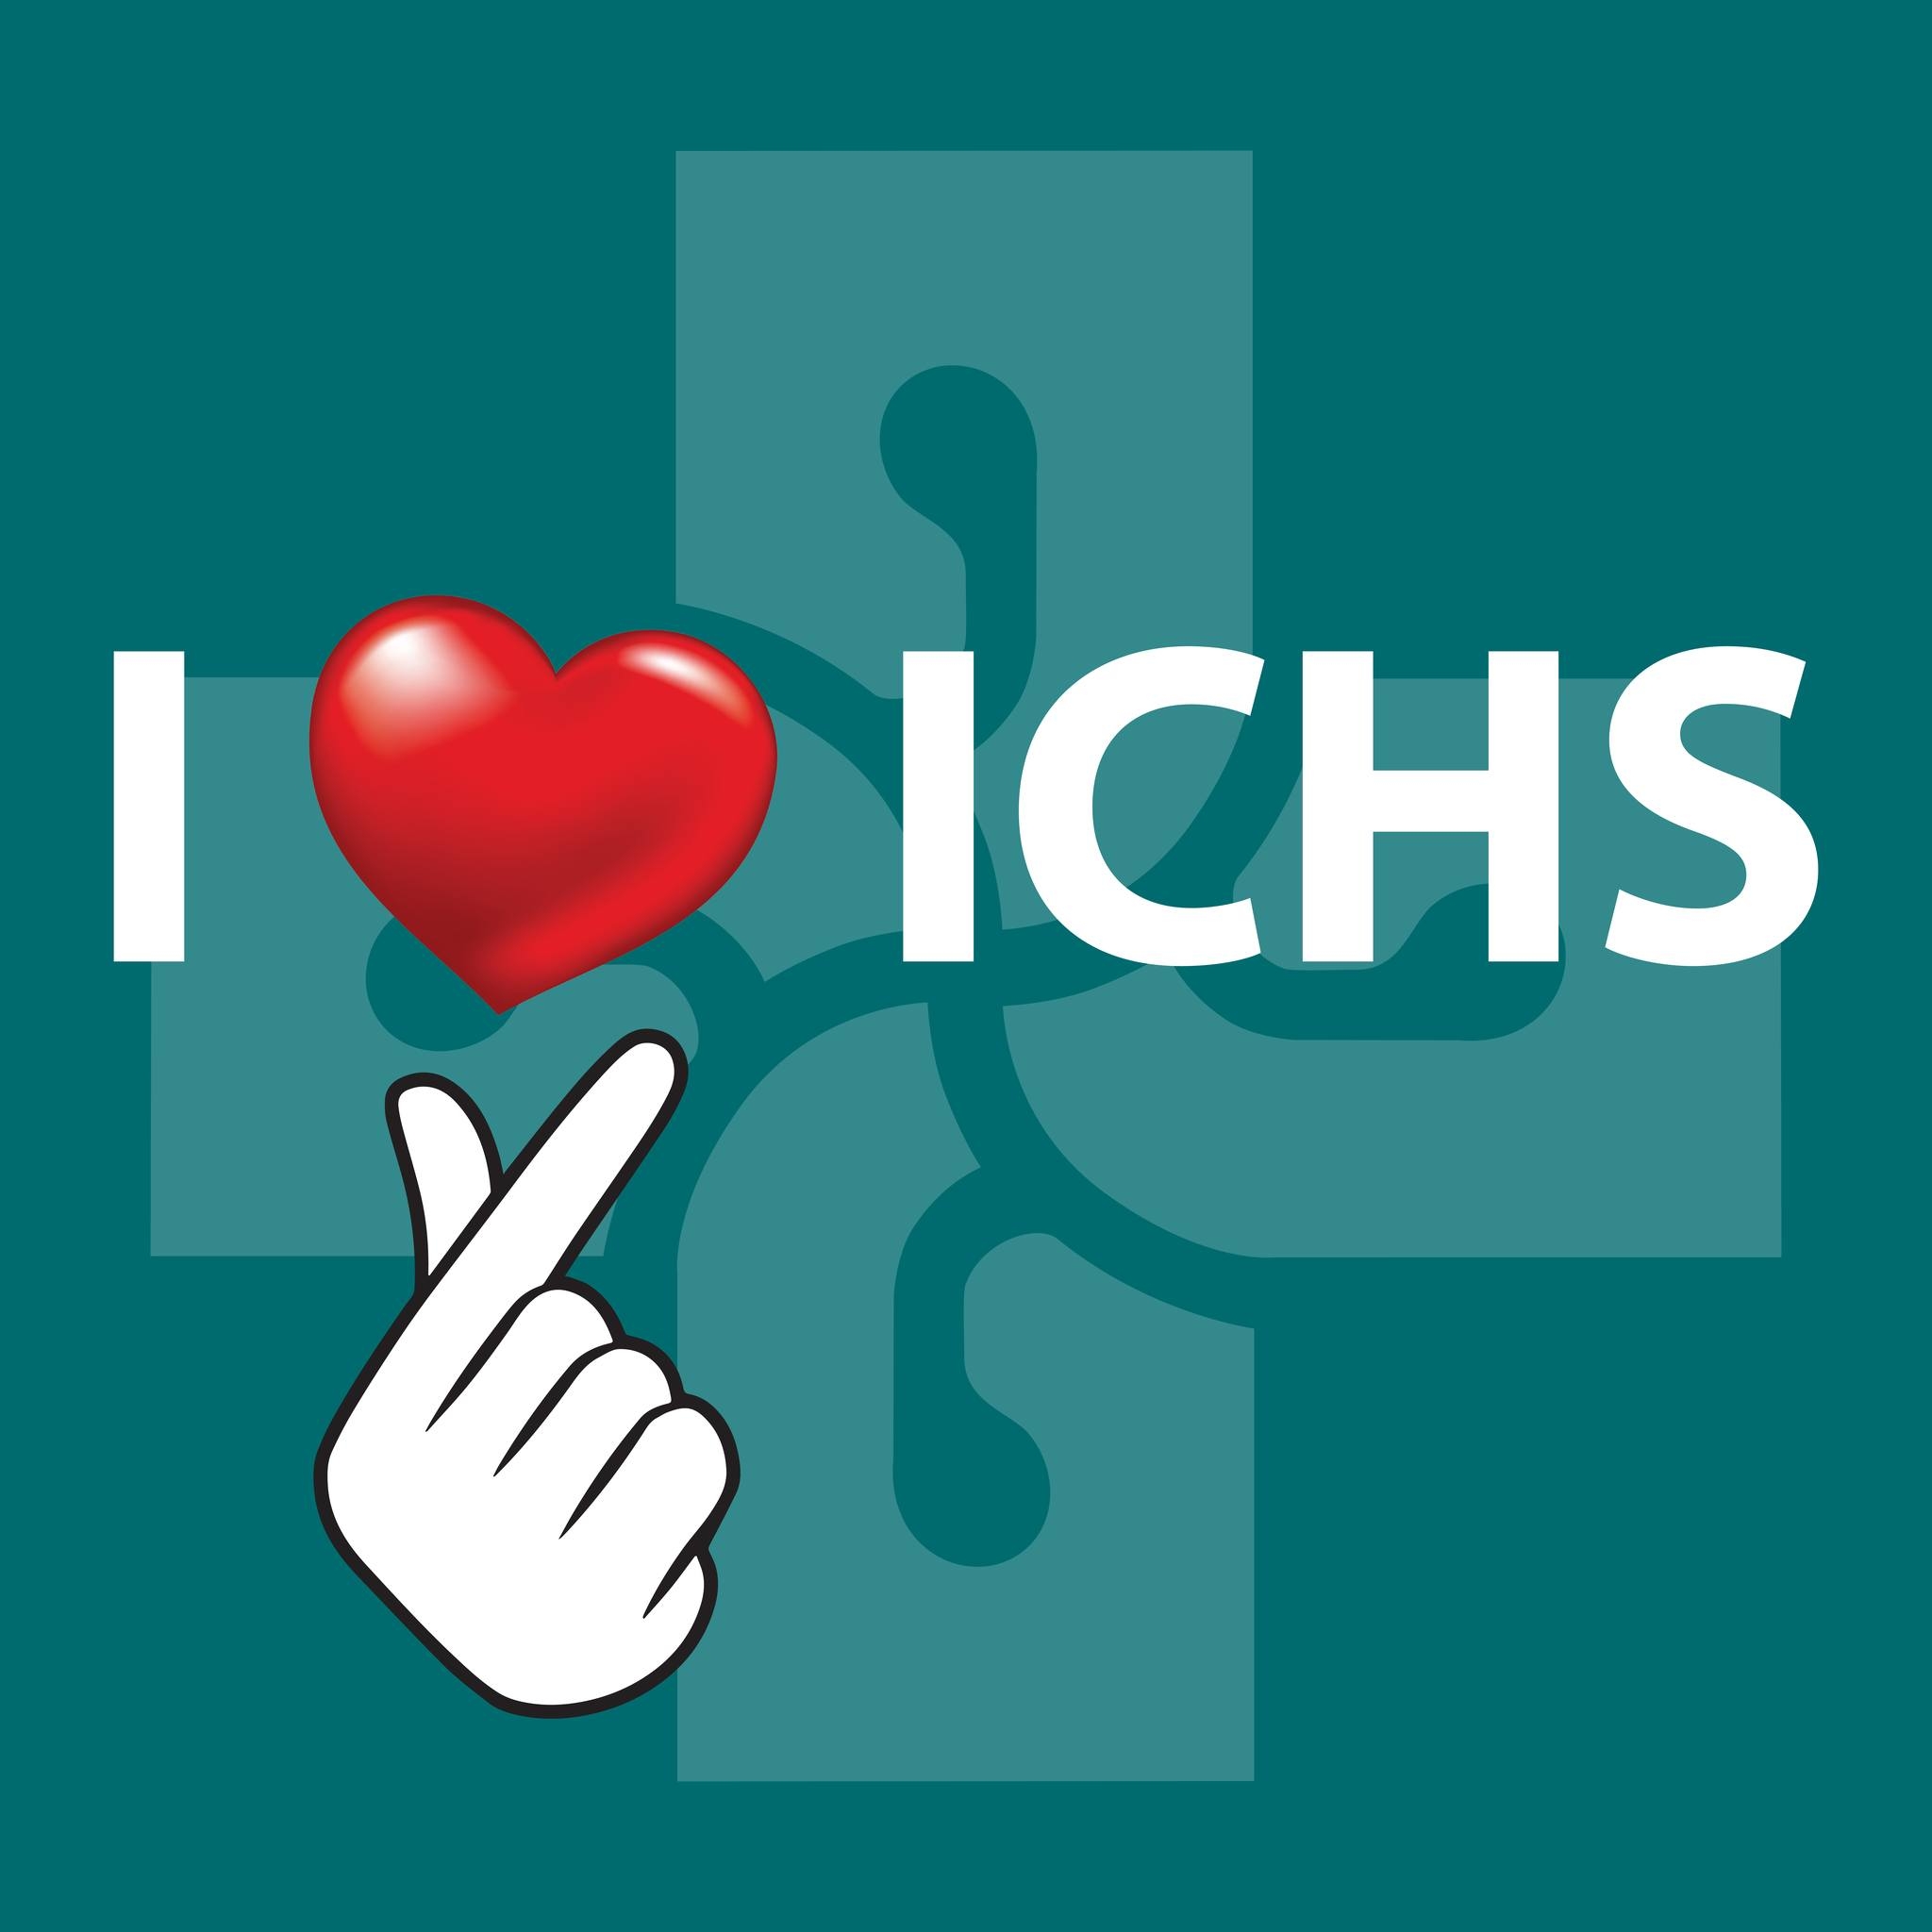 ICHS Shoreline Medical and Dental Clinic